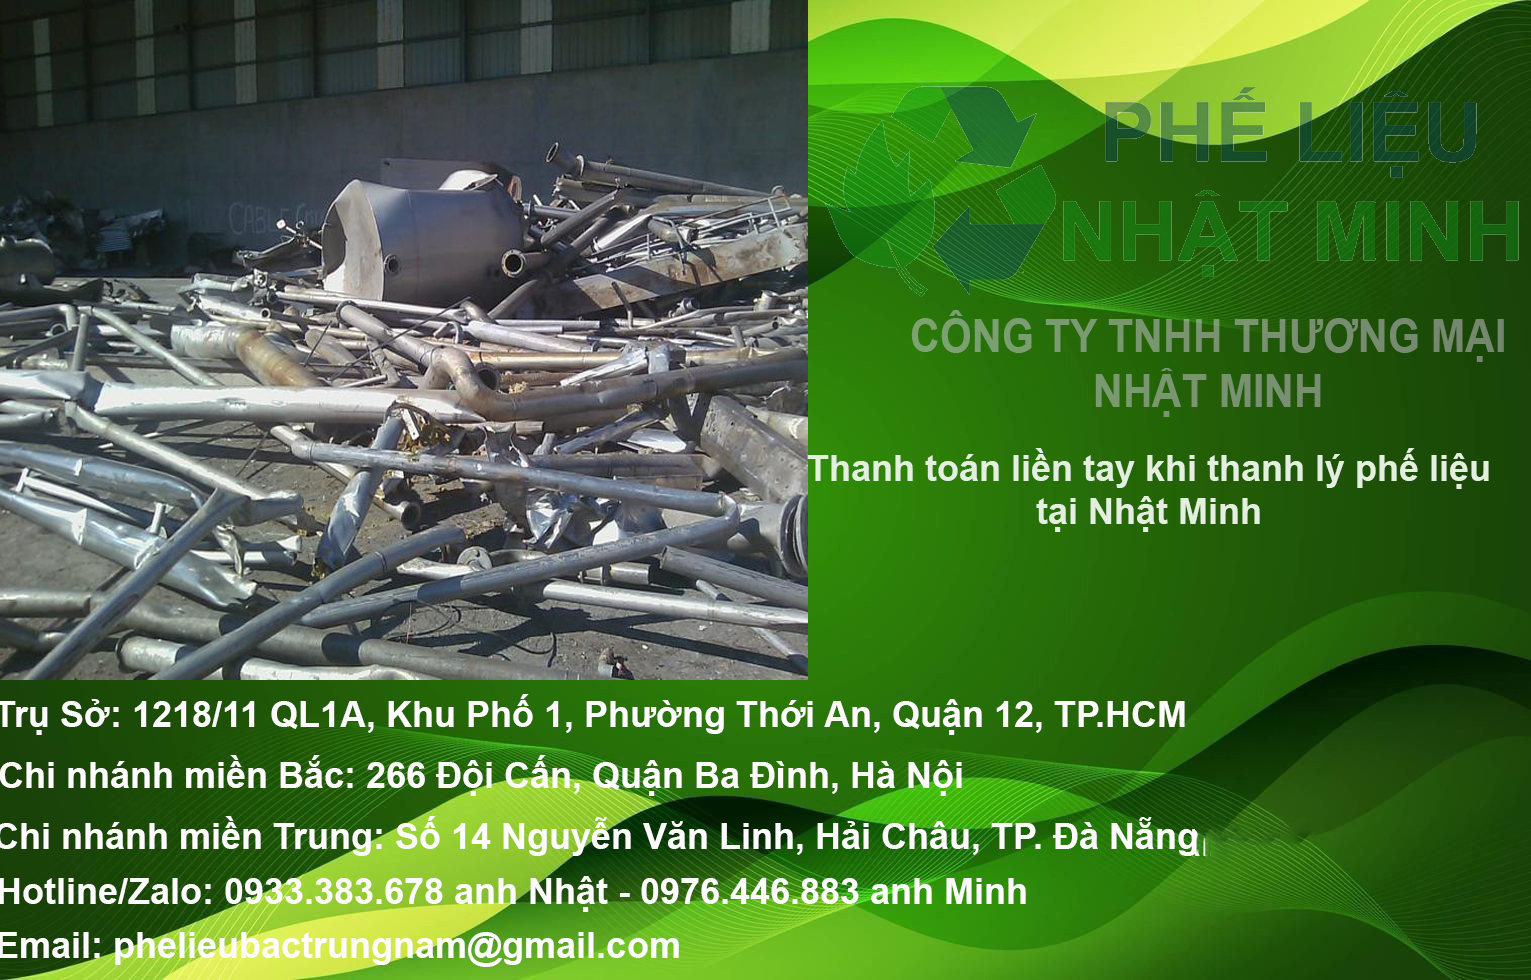 Thanh Ly Phe Lieu Nhat Minh Company